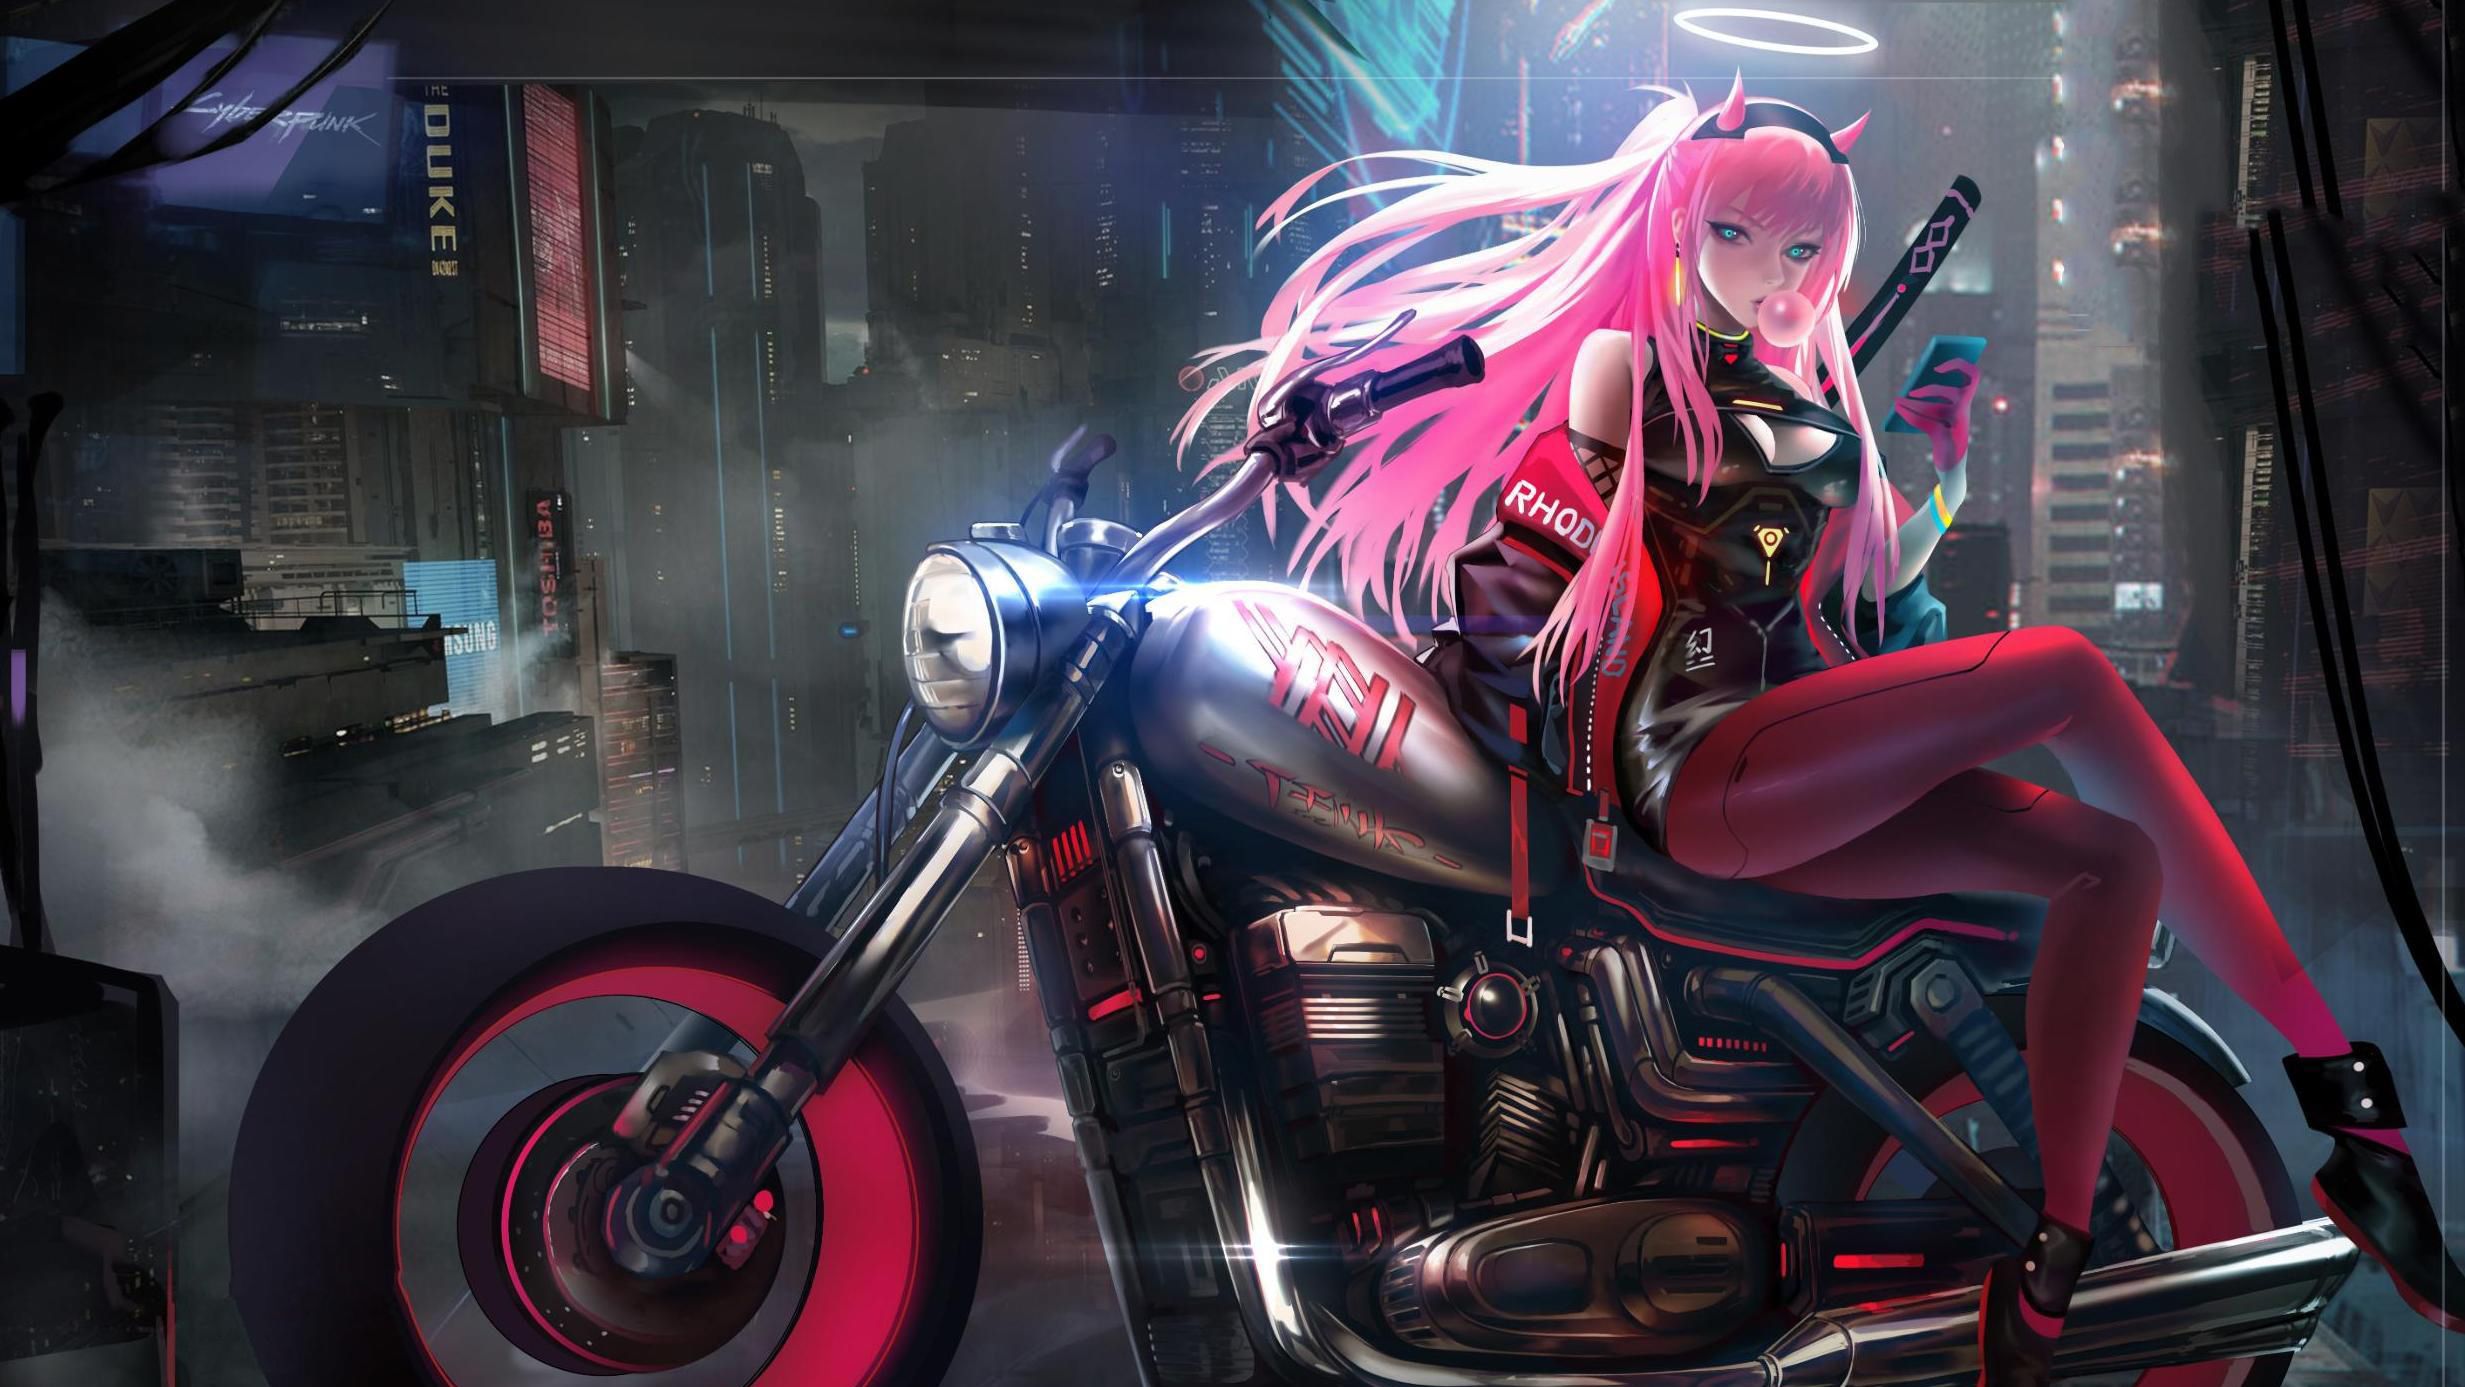 Anime Girl With Motorcycle